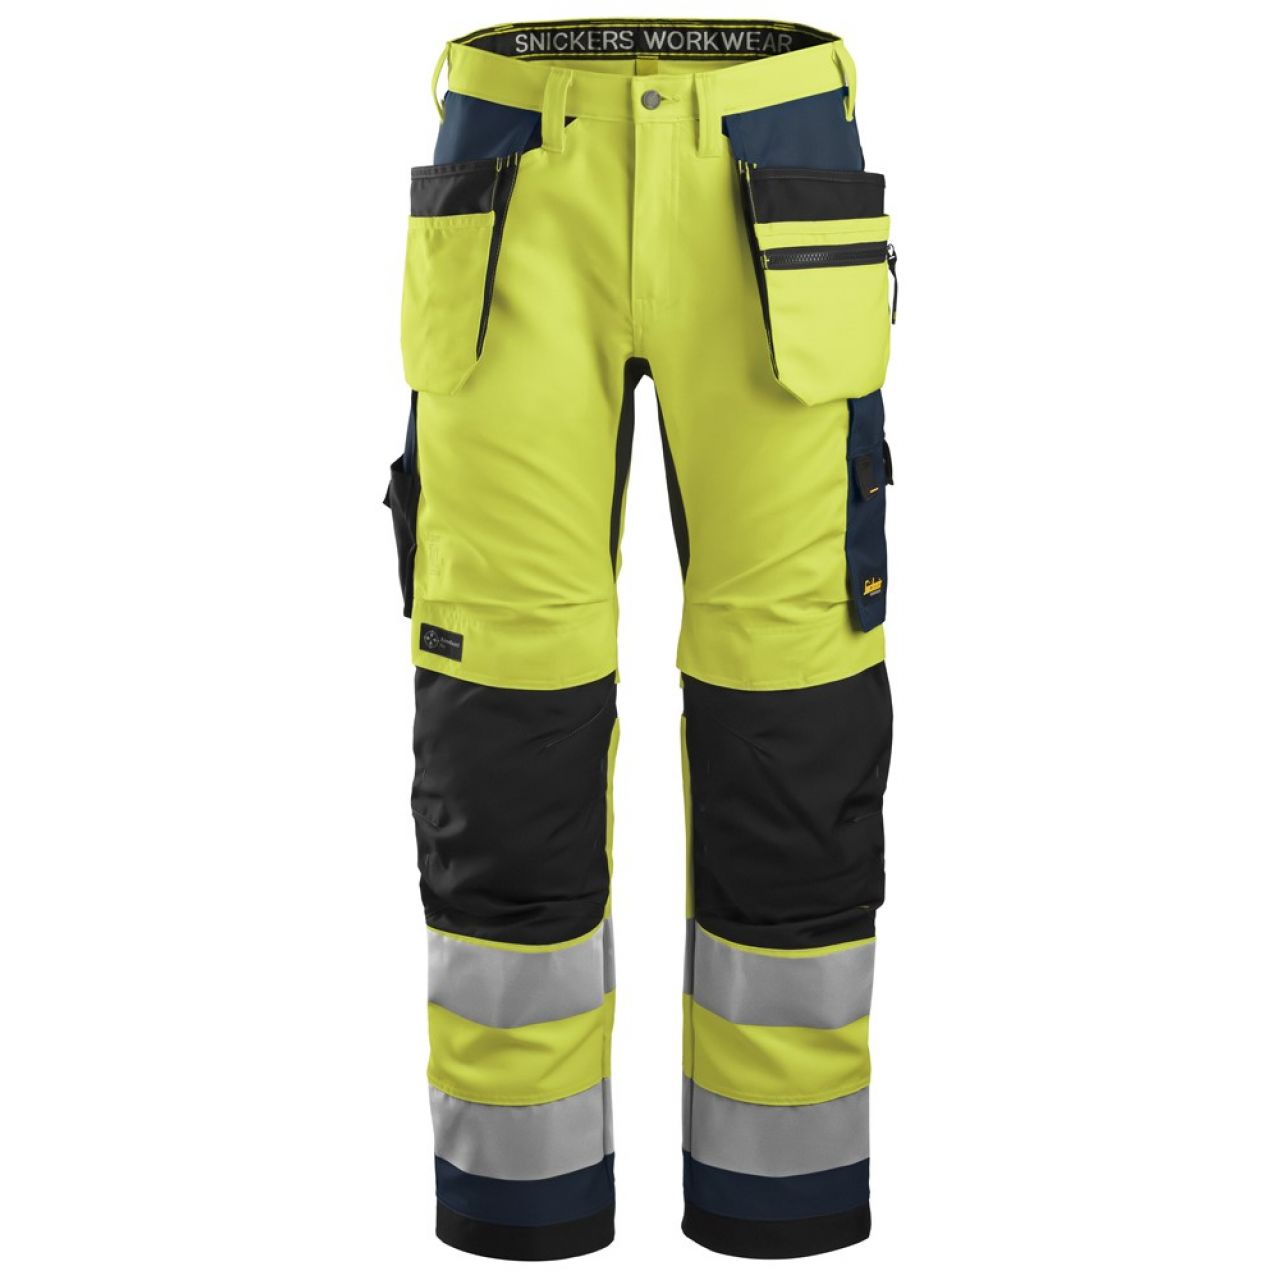 6230 Pantalones largos de trabajo de alta visibilidad clase 2 con bolsillos flotantes AllroundWork amarillo-azul marino talla 250